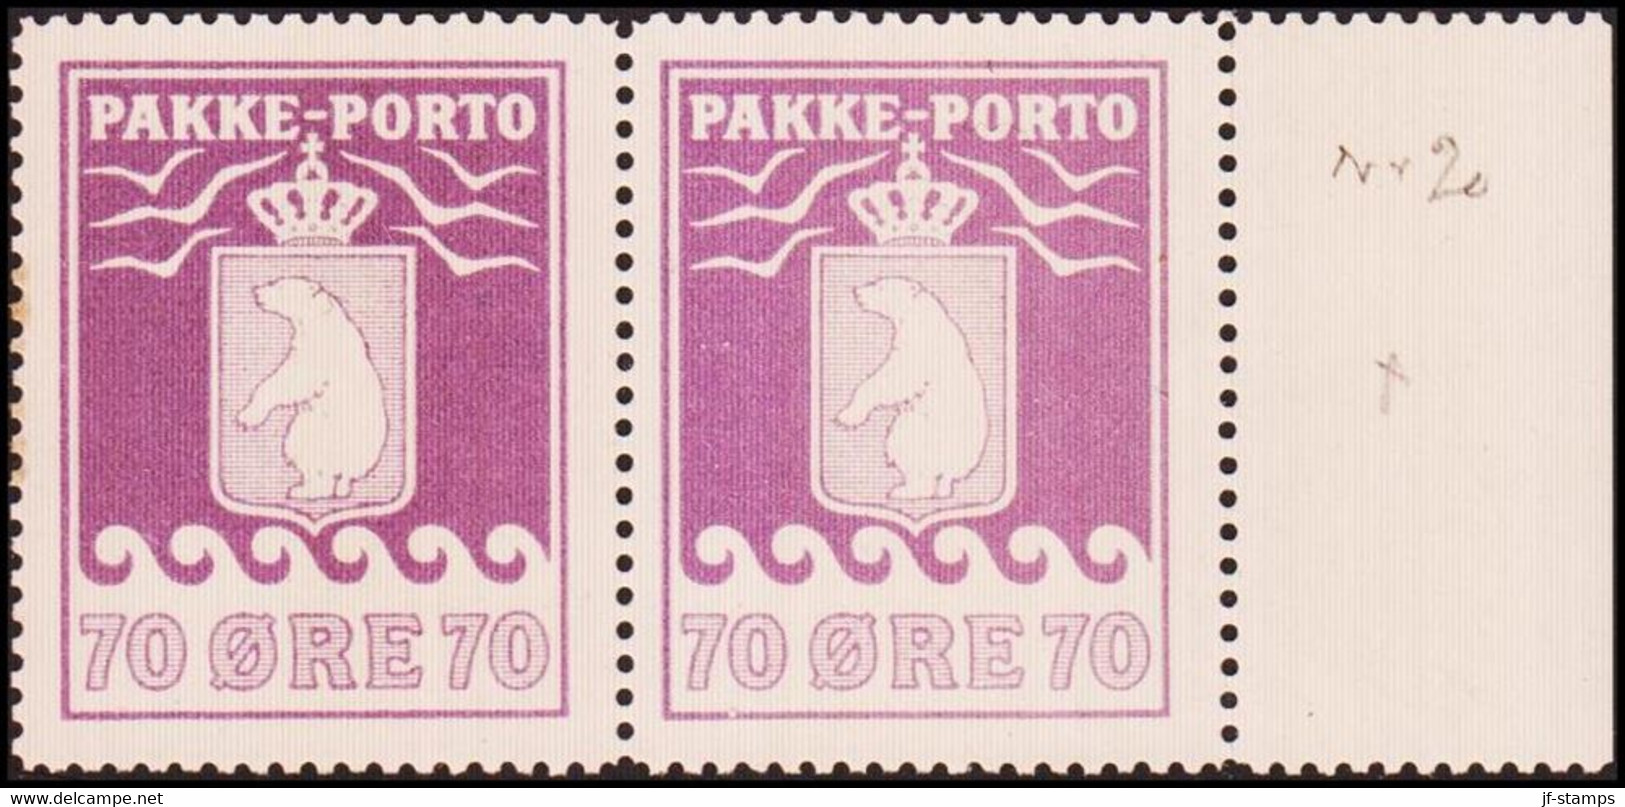 1937. PAKKE PORTO. 70 øre Pale Violet. Andreasen & Lachmann Litho. Perf. 11. Never Hi... (Michel 13) - JF415146 - Spoorwegzegels